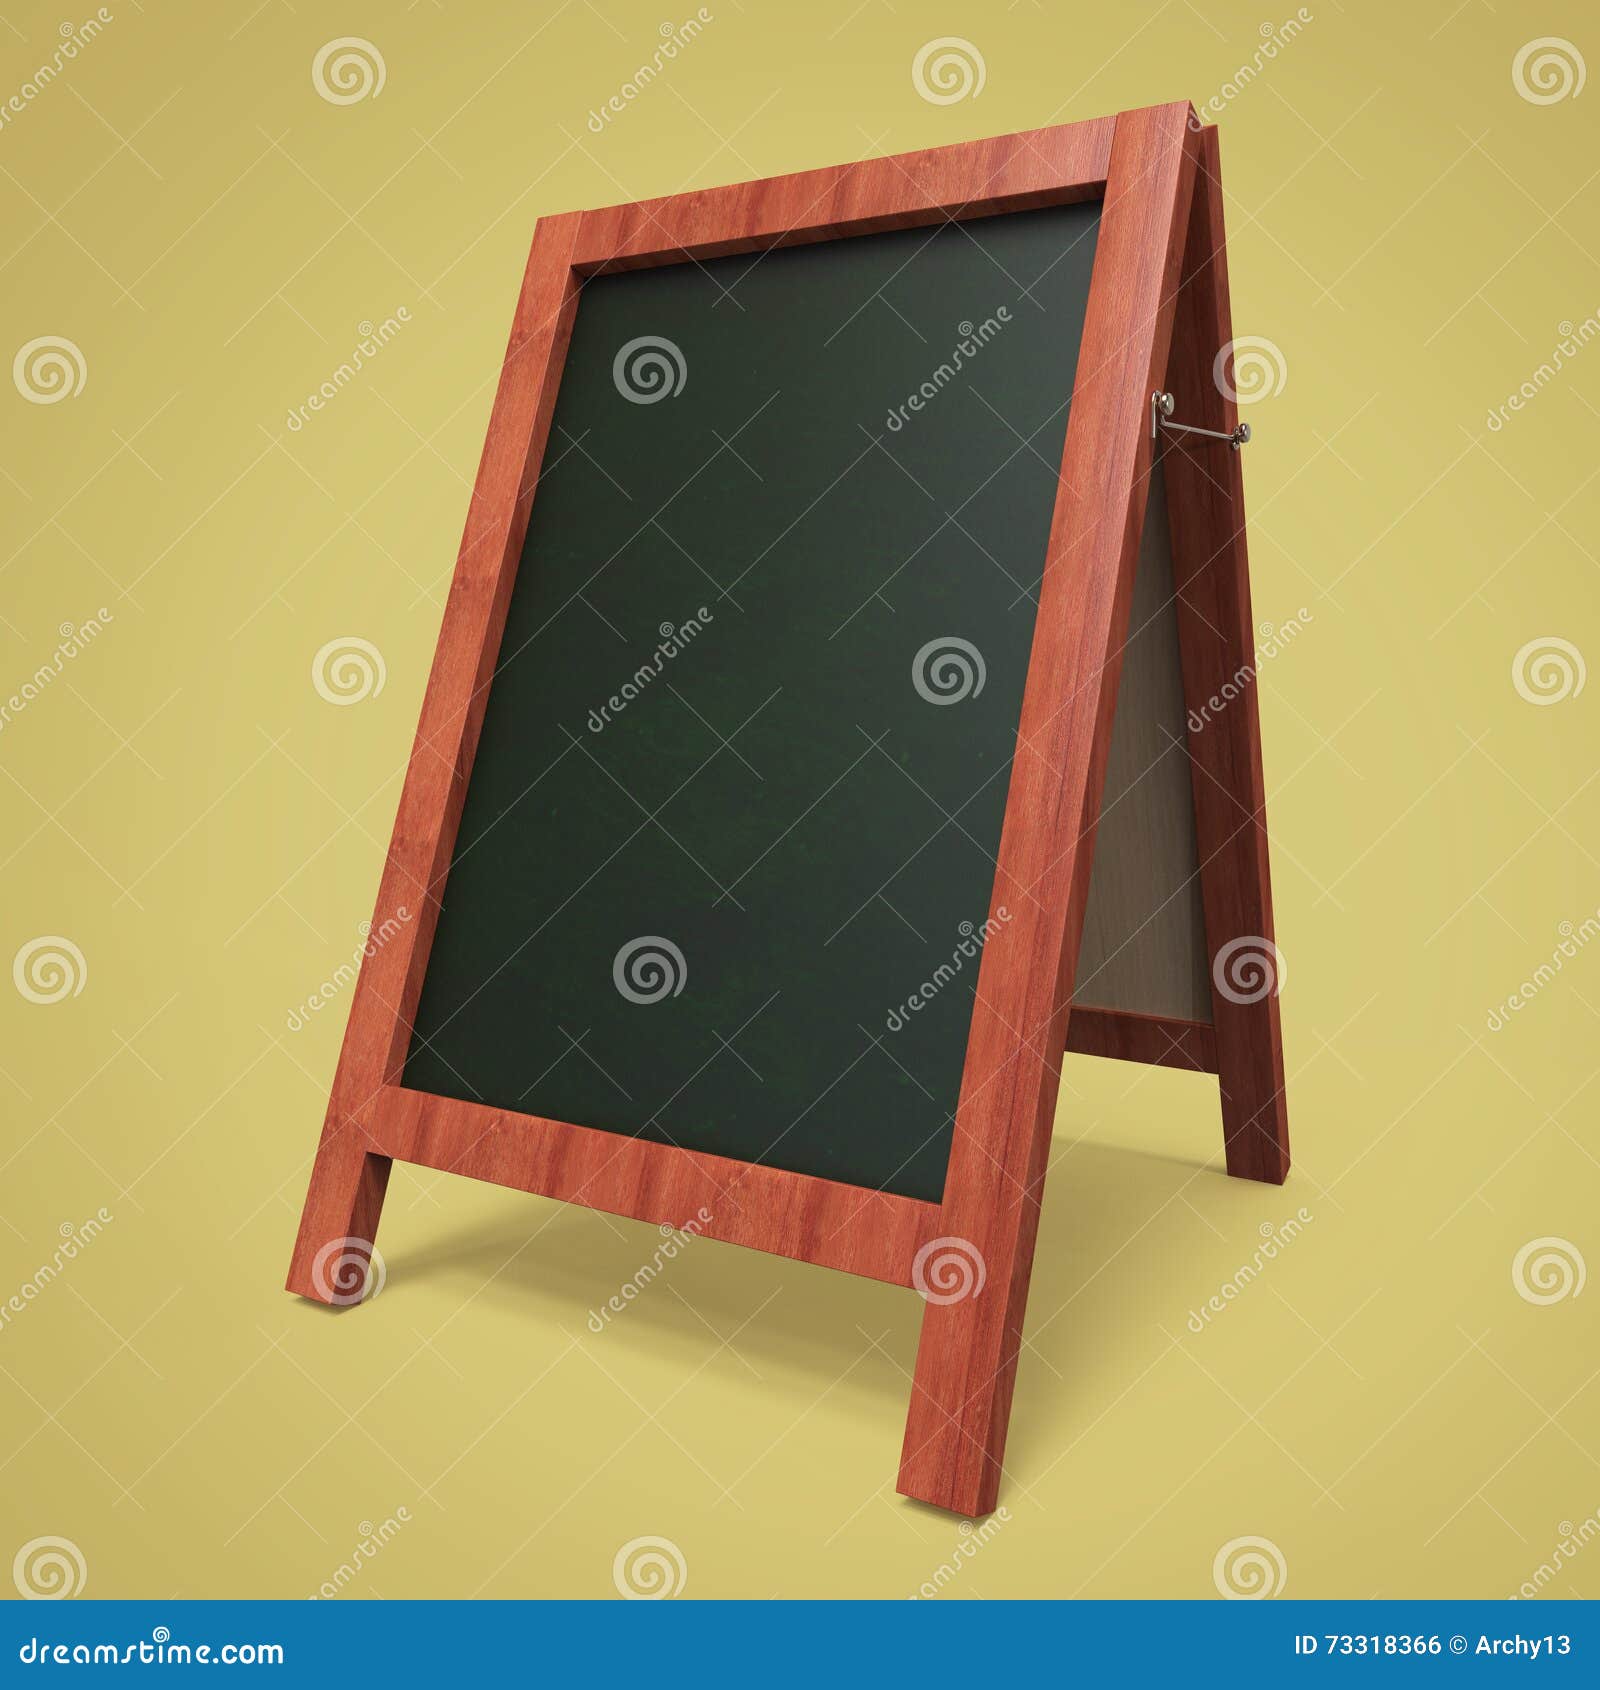 blank menu advertisement chalkboard blackboard outdoor display render d 73318366